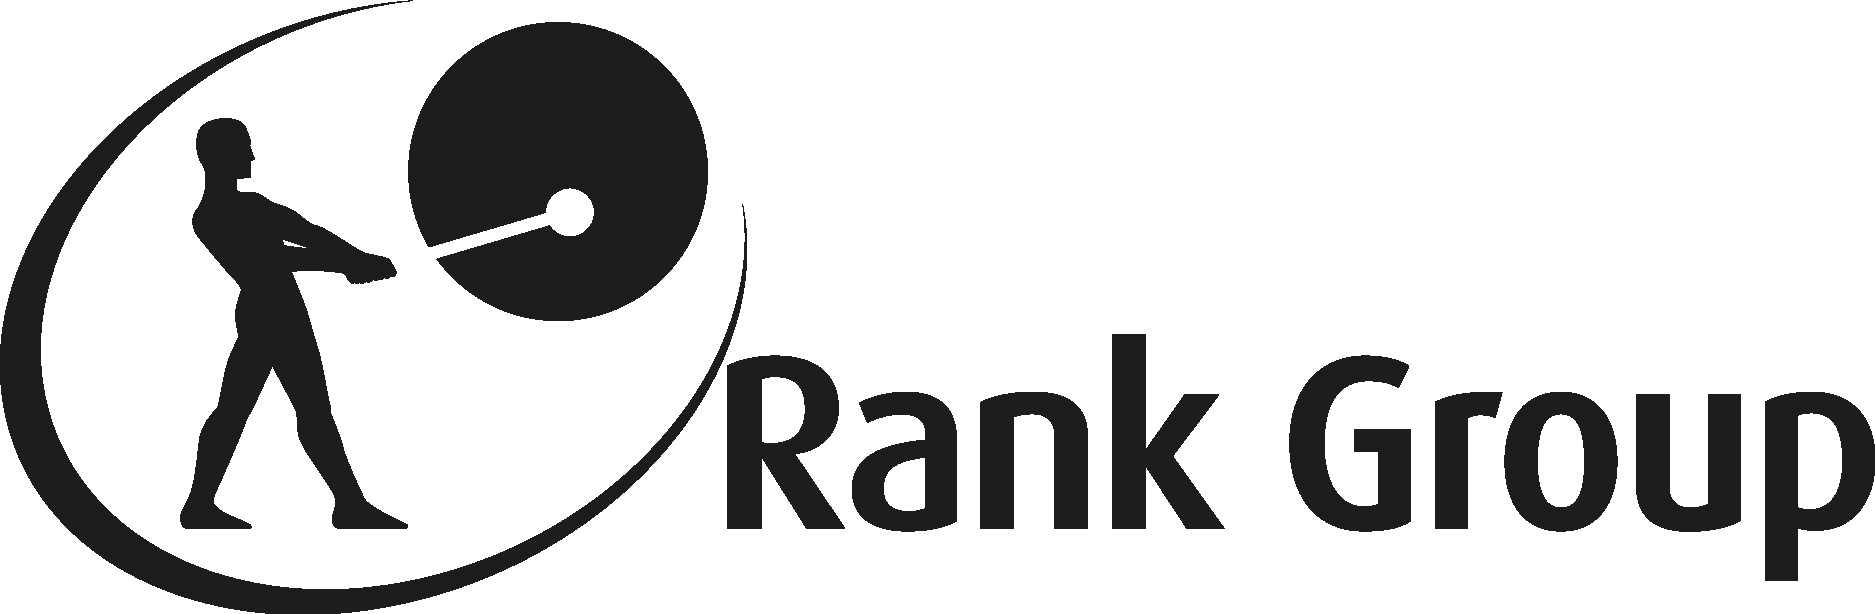 Group rank. Rank Group logo. Lares Group логотип. St Group логотип. Kravtgroup лого.